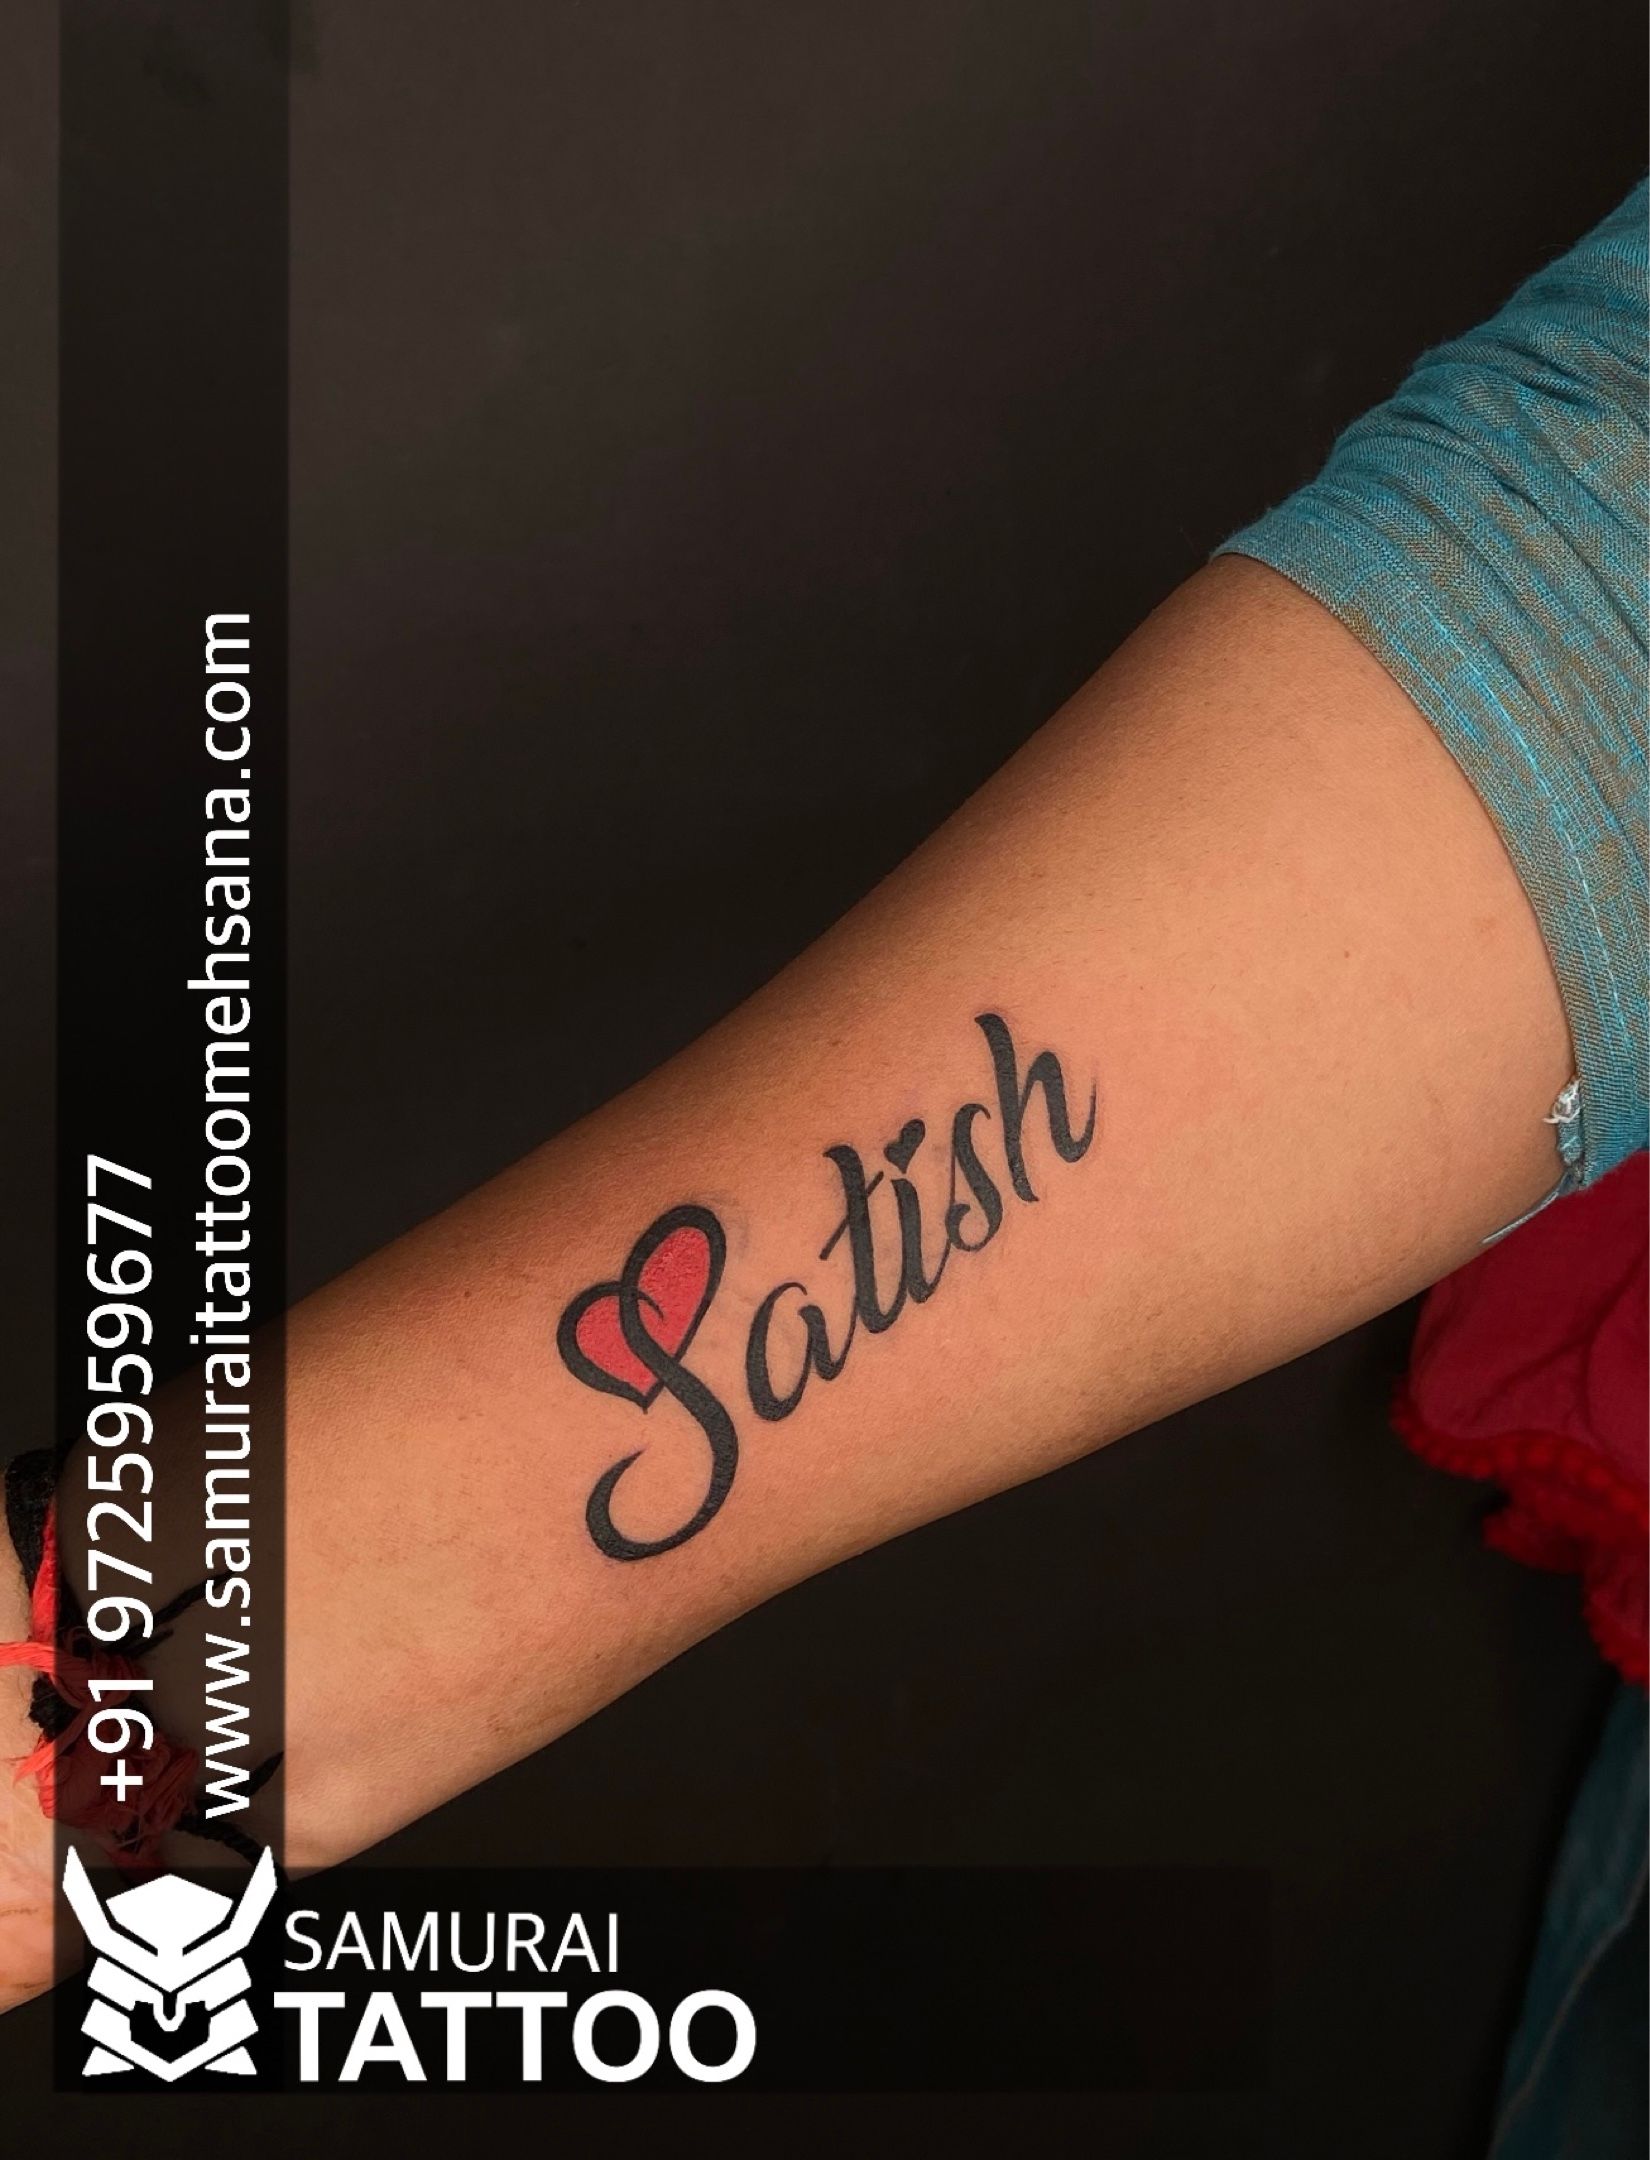 Tattoo uploaded by Samurai Tattoo mehsana  Satish name tattoo Satish  tattoo Satish tattoo ideas Satish name tattoo ideas  Tattoodo